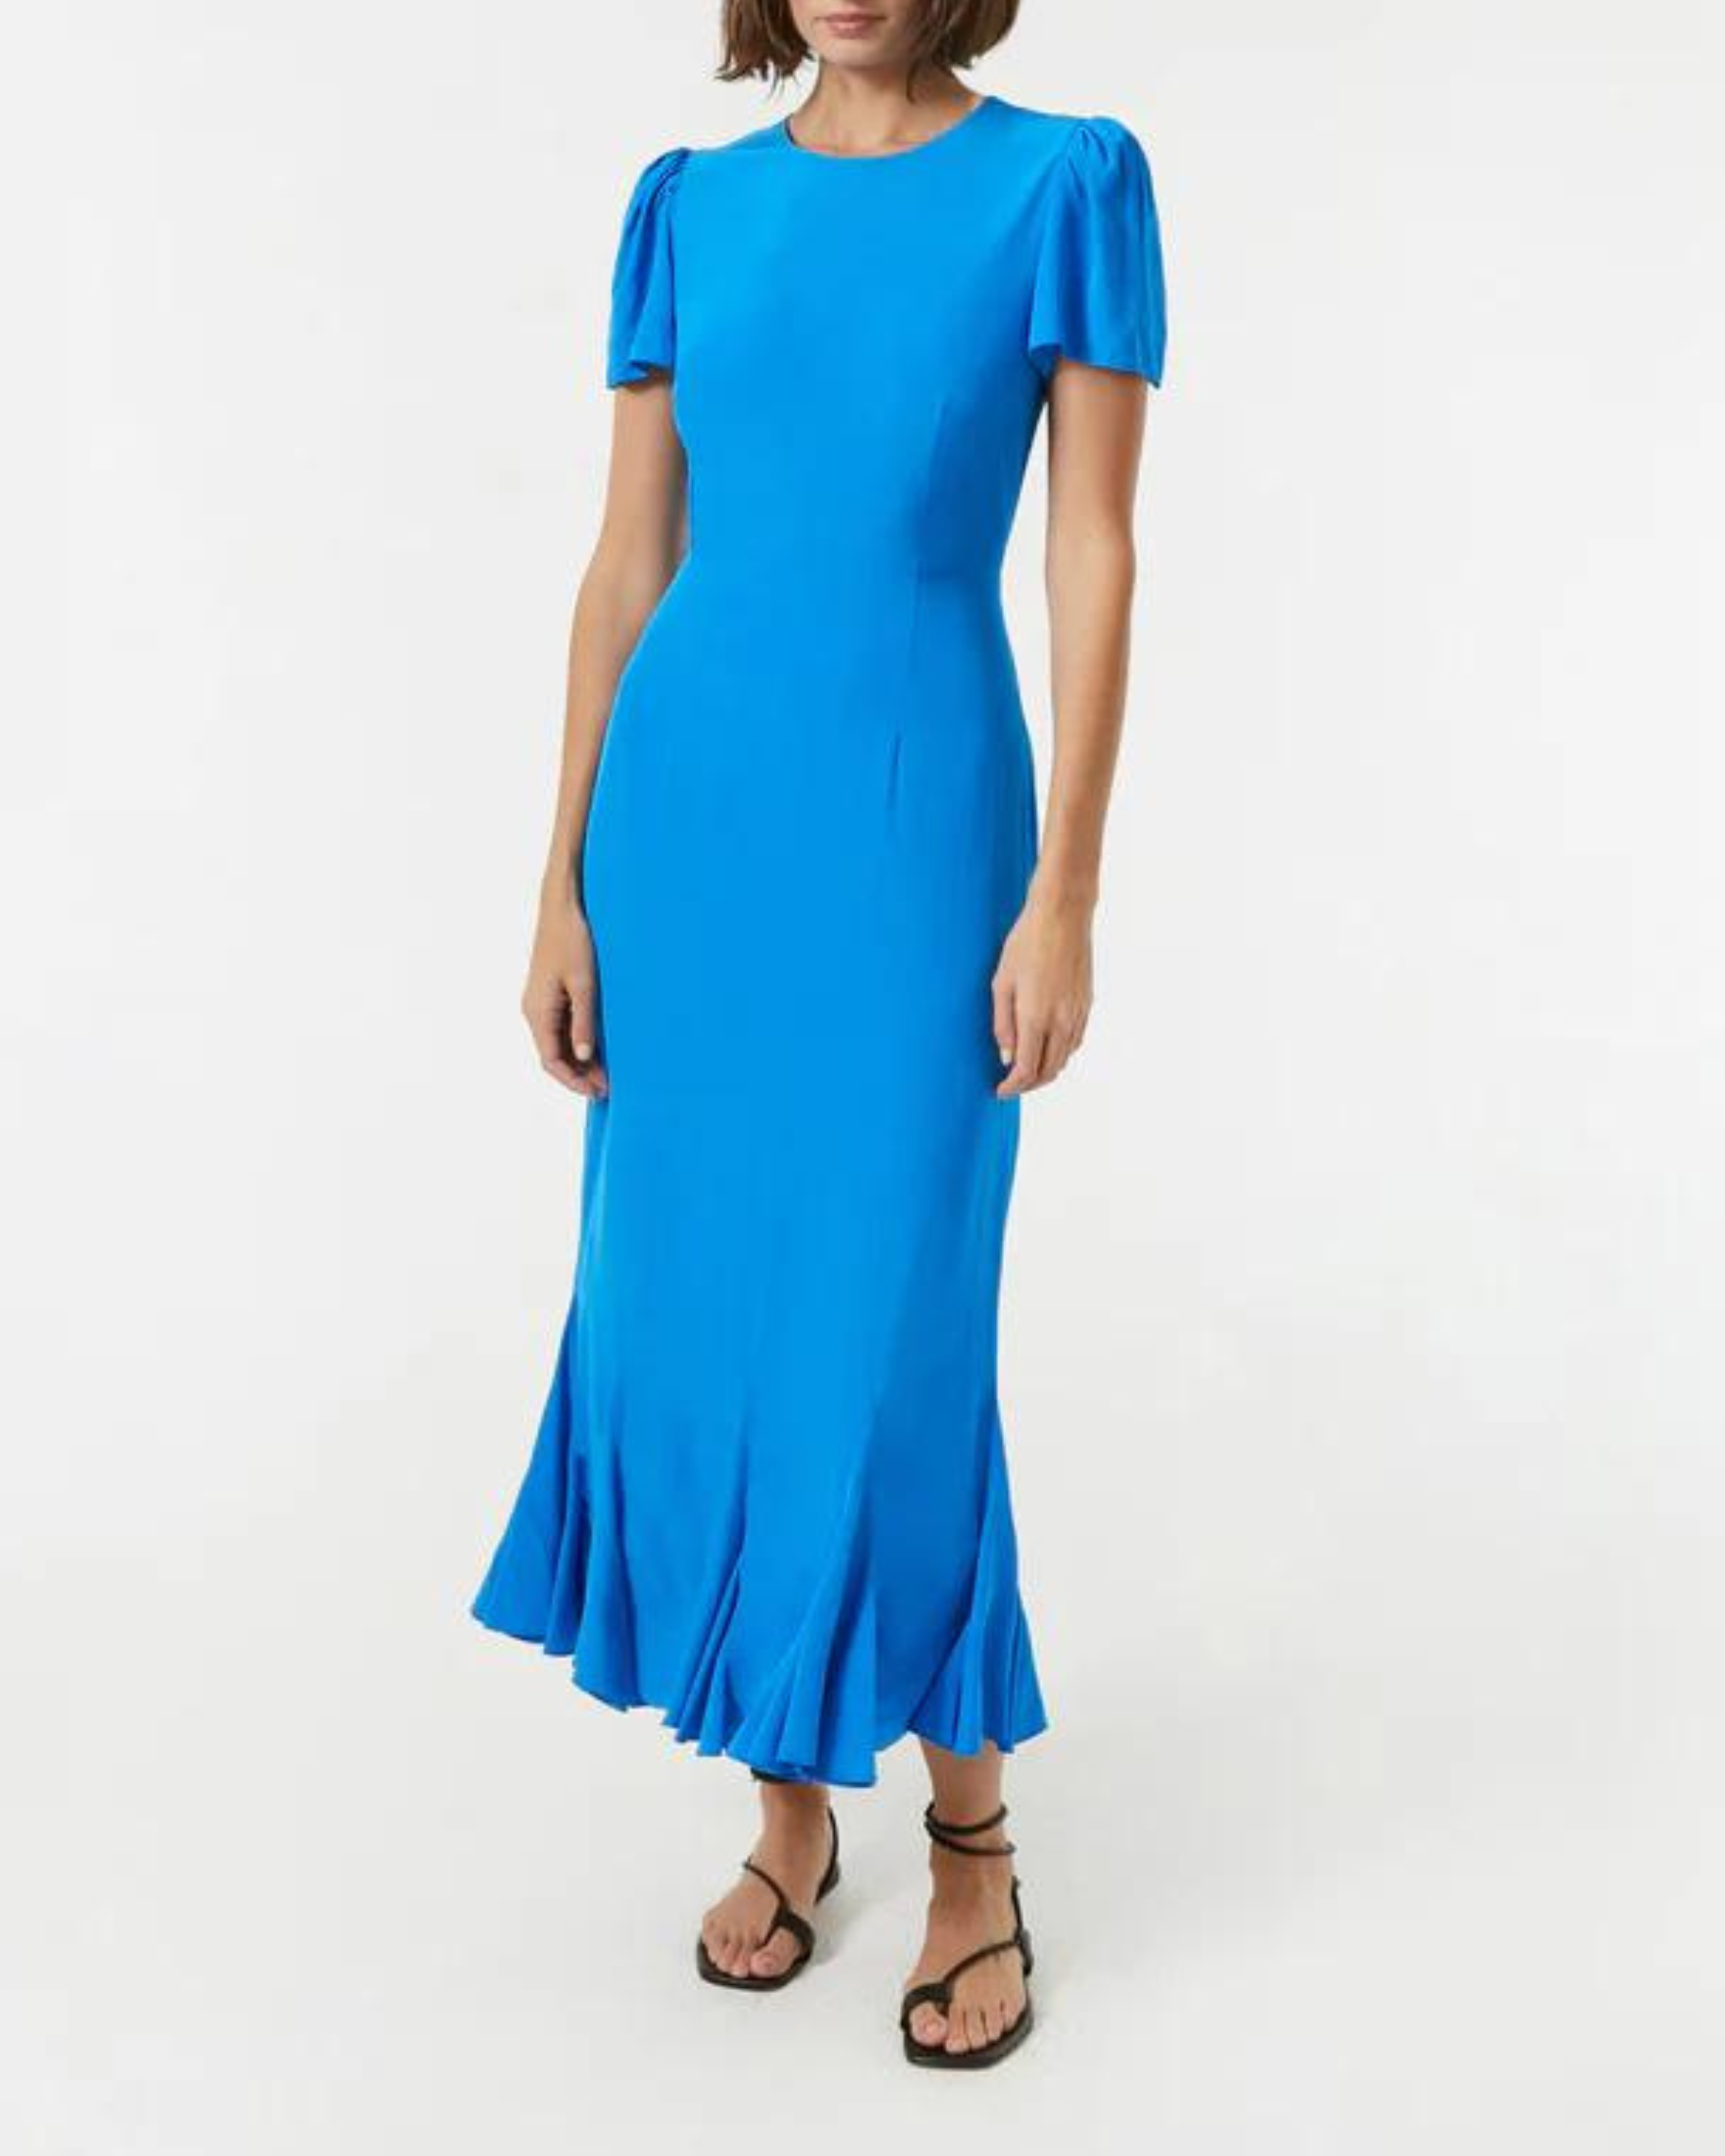 Rhode Lulani Dress in Sapphire Blue